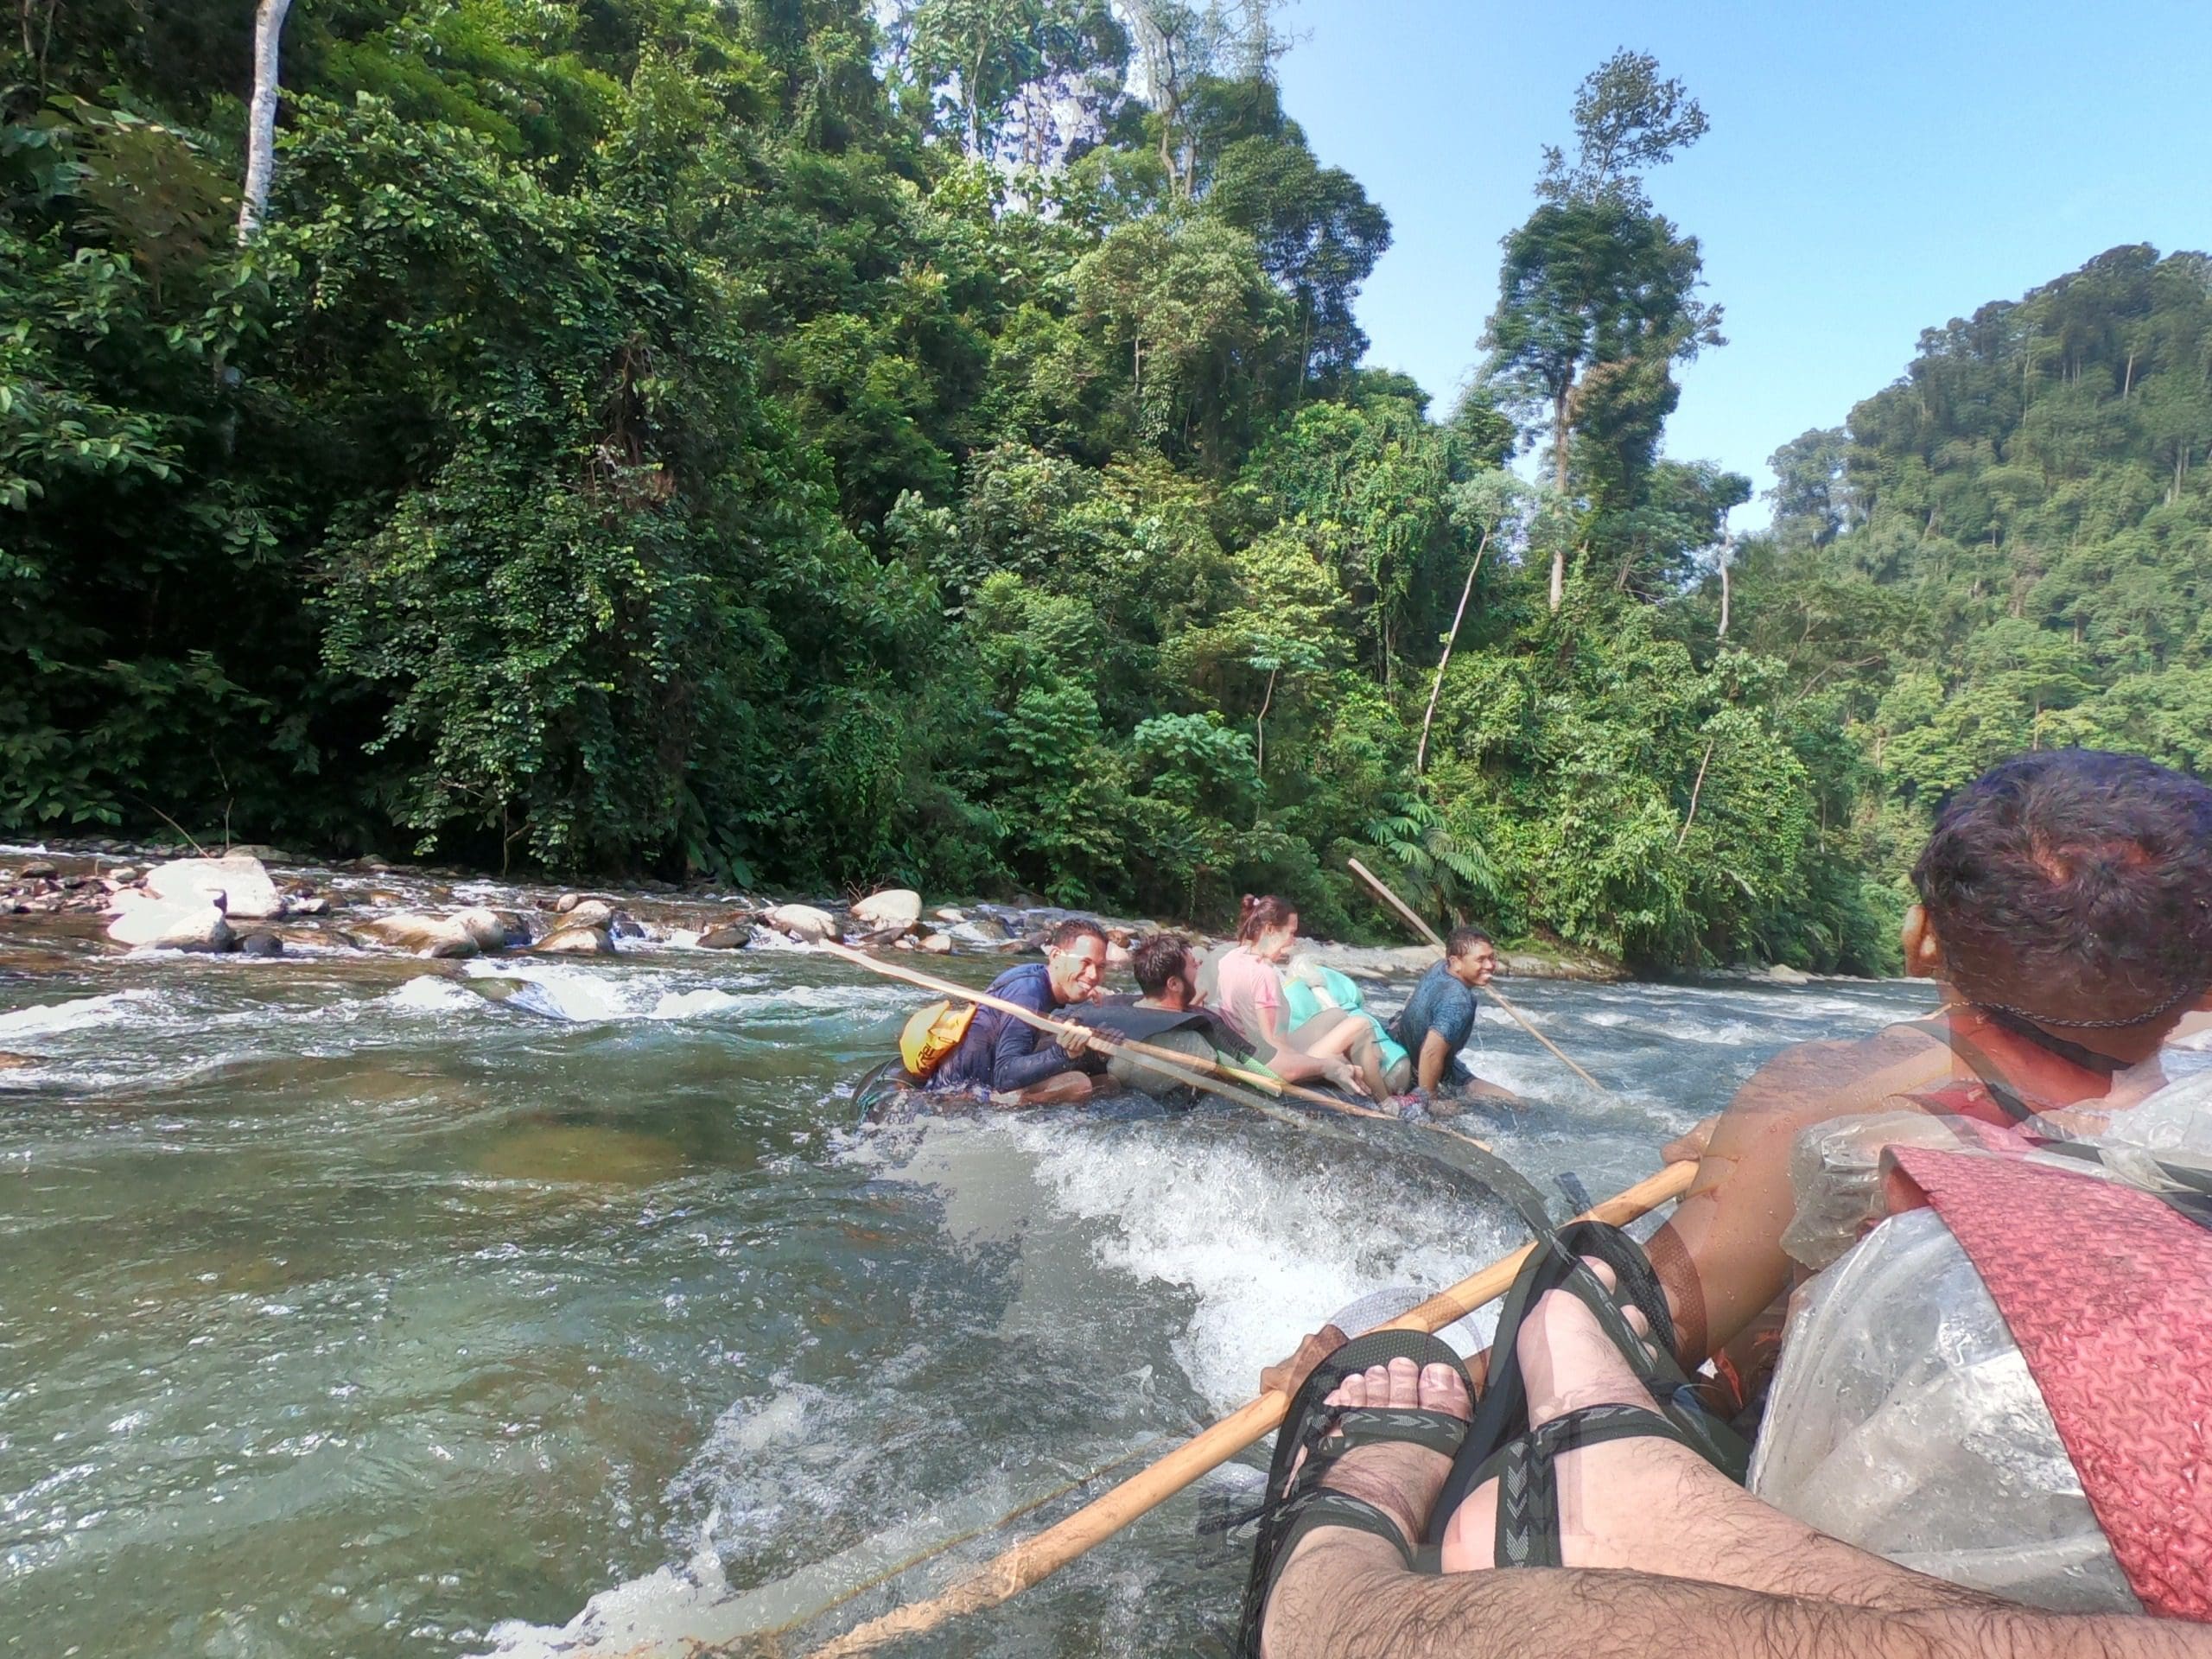 Rafting down the river and rapids,Jungle trek Sumatra Indonesia 